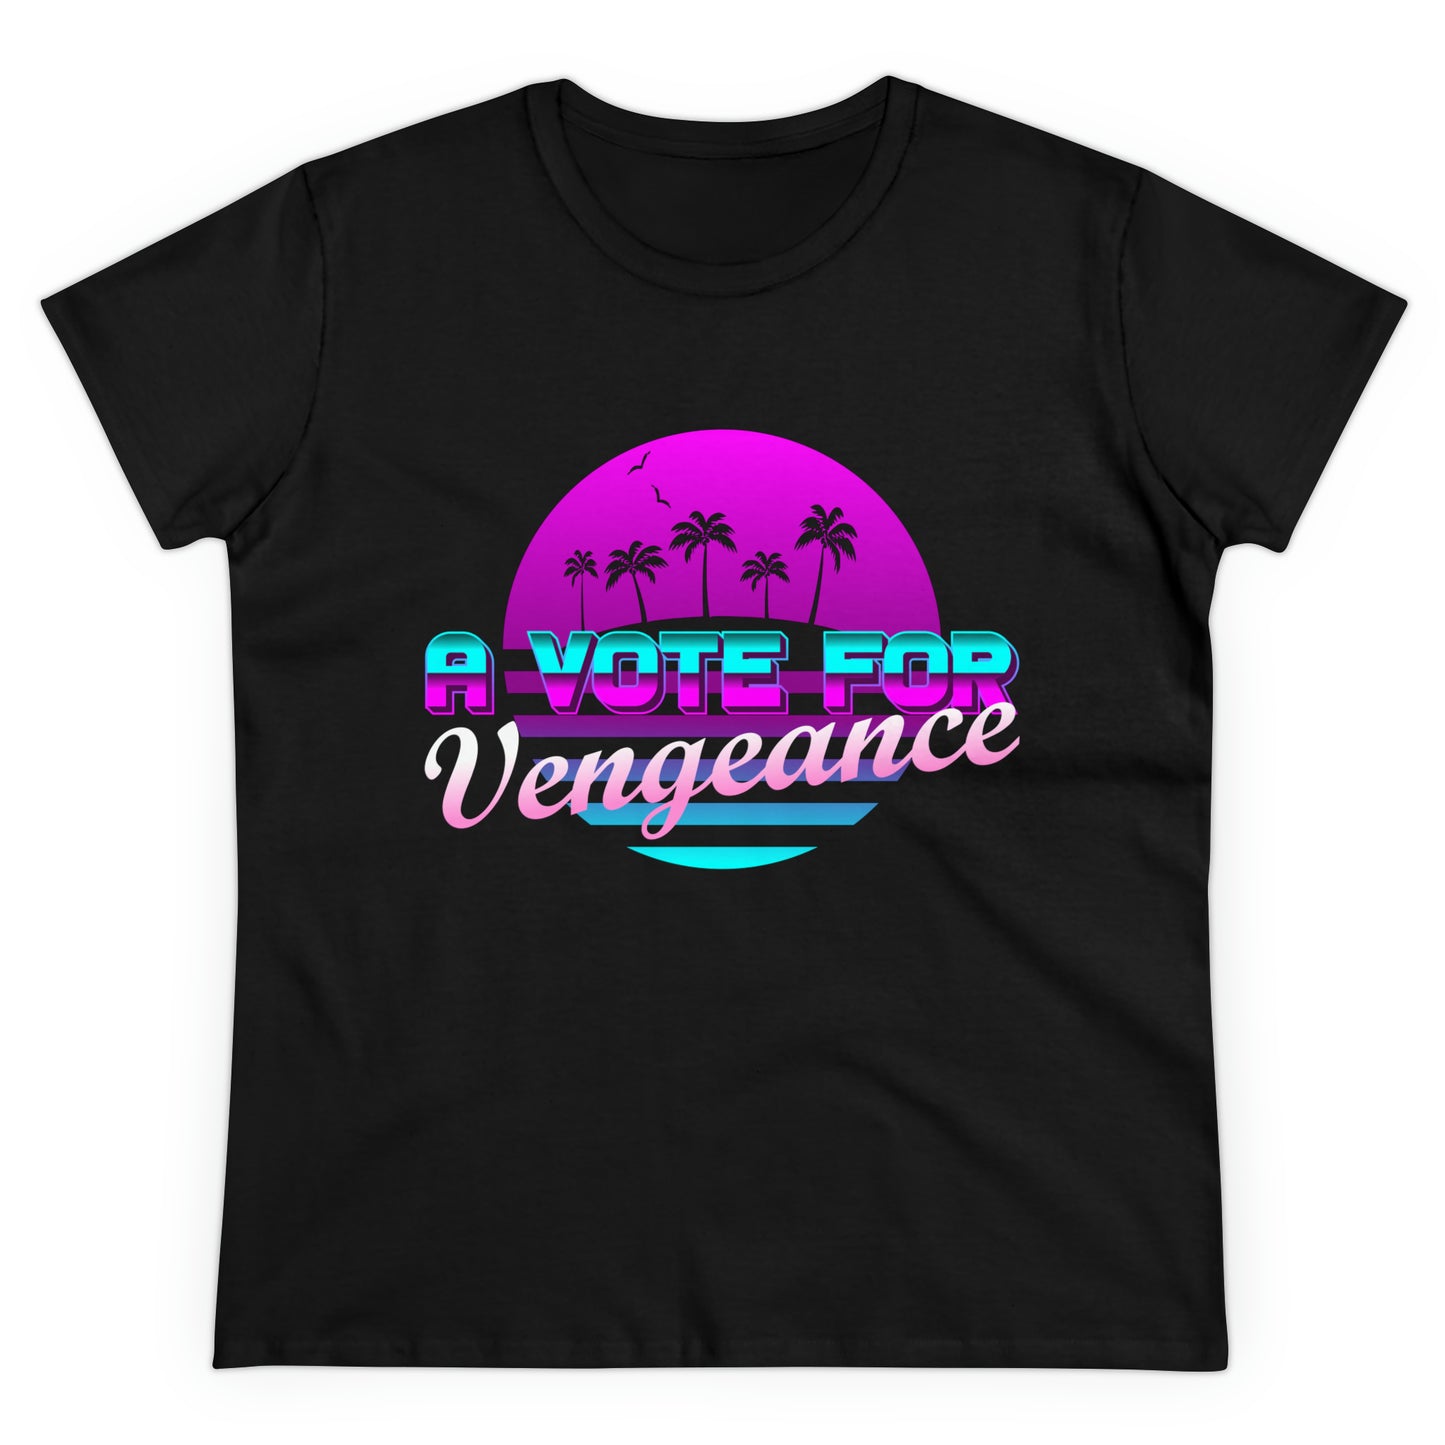 "Vengeance" Women's Tee